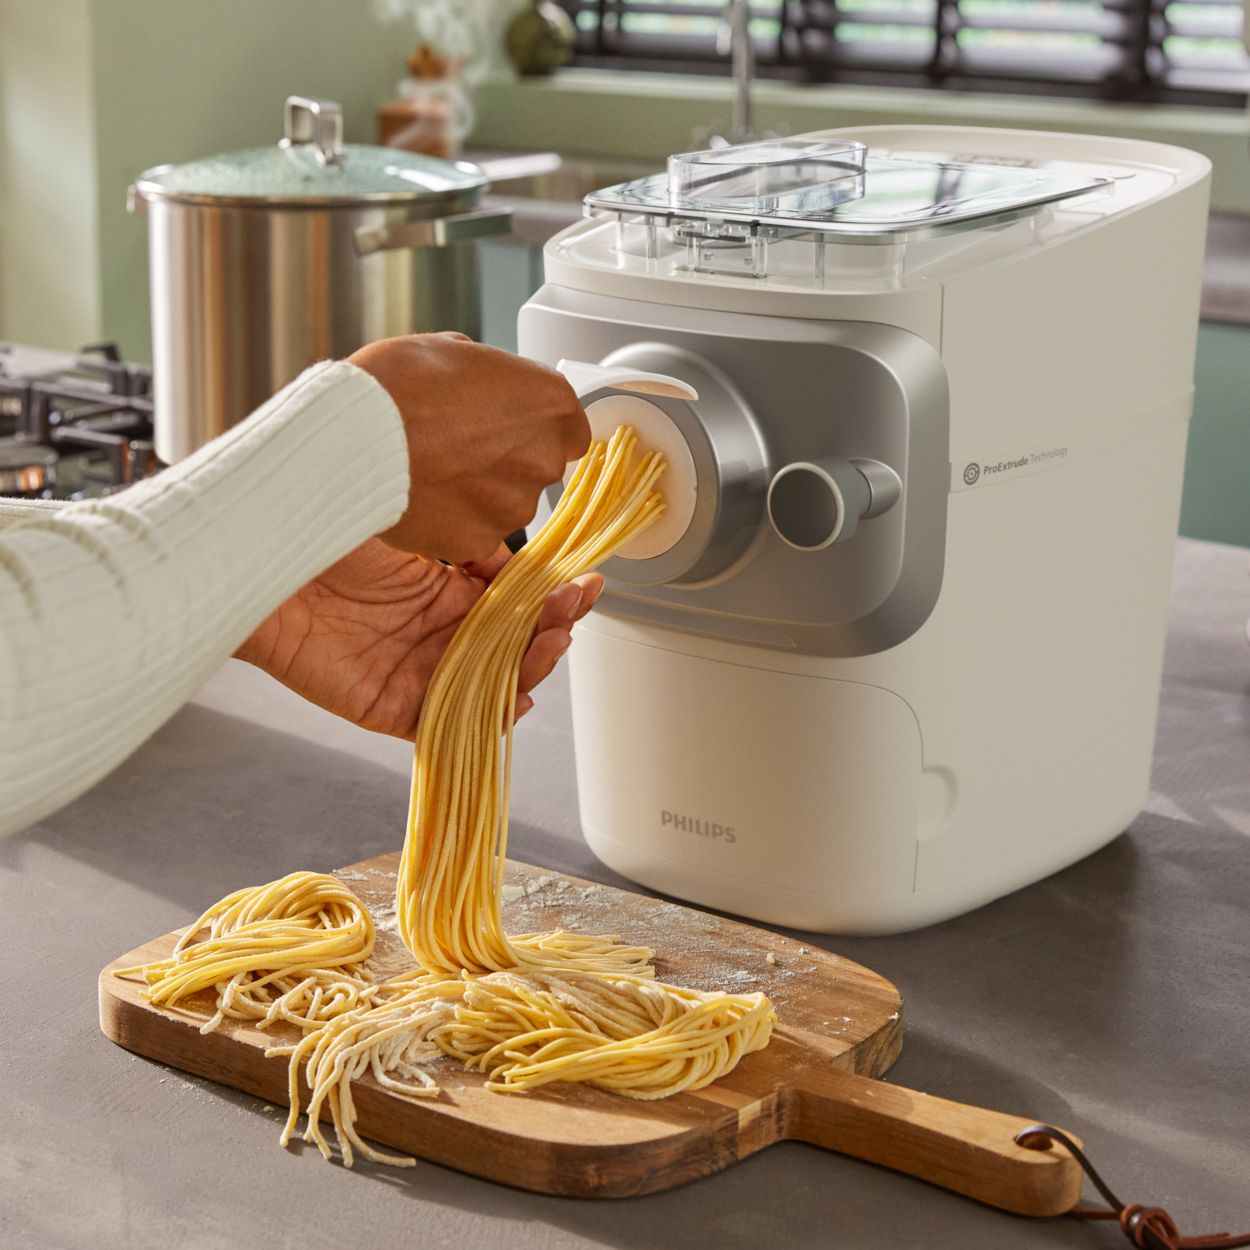 7000 series Pasta Maker HR2660/03